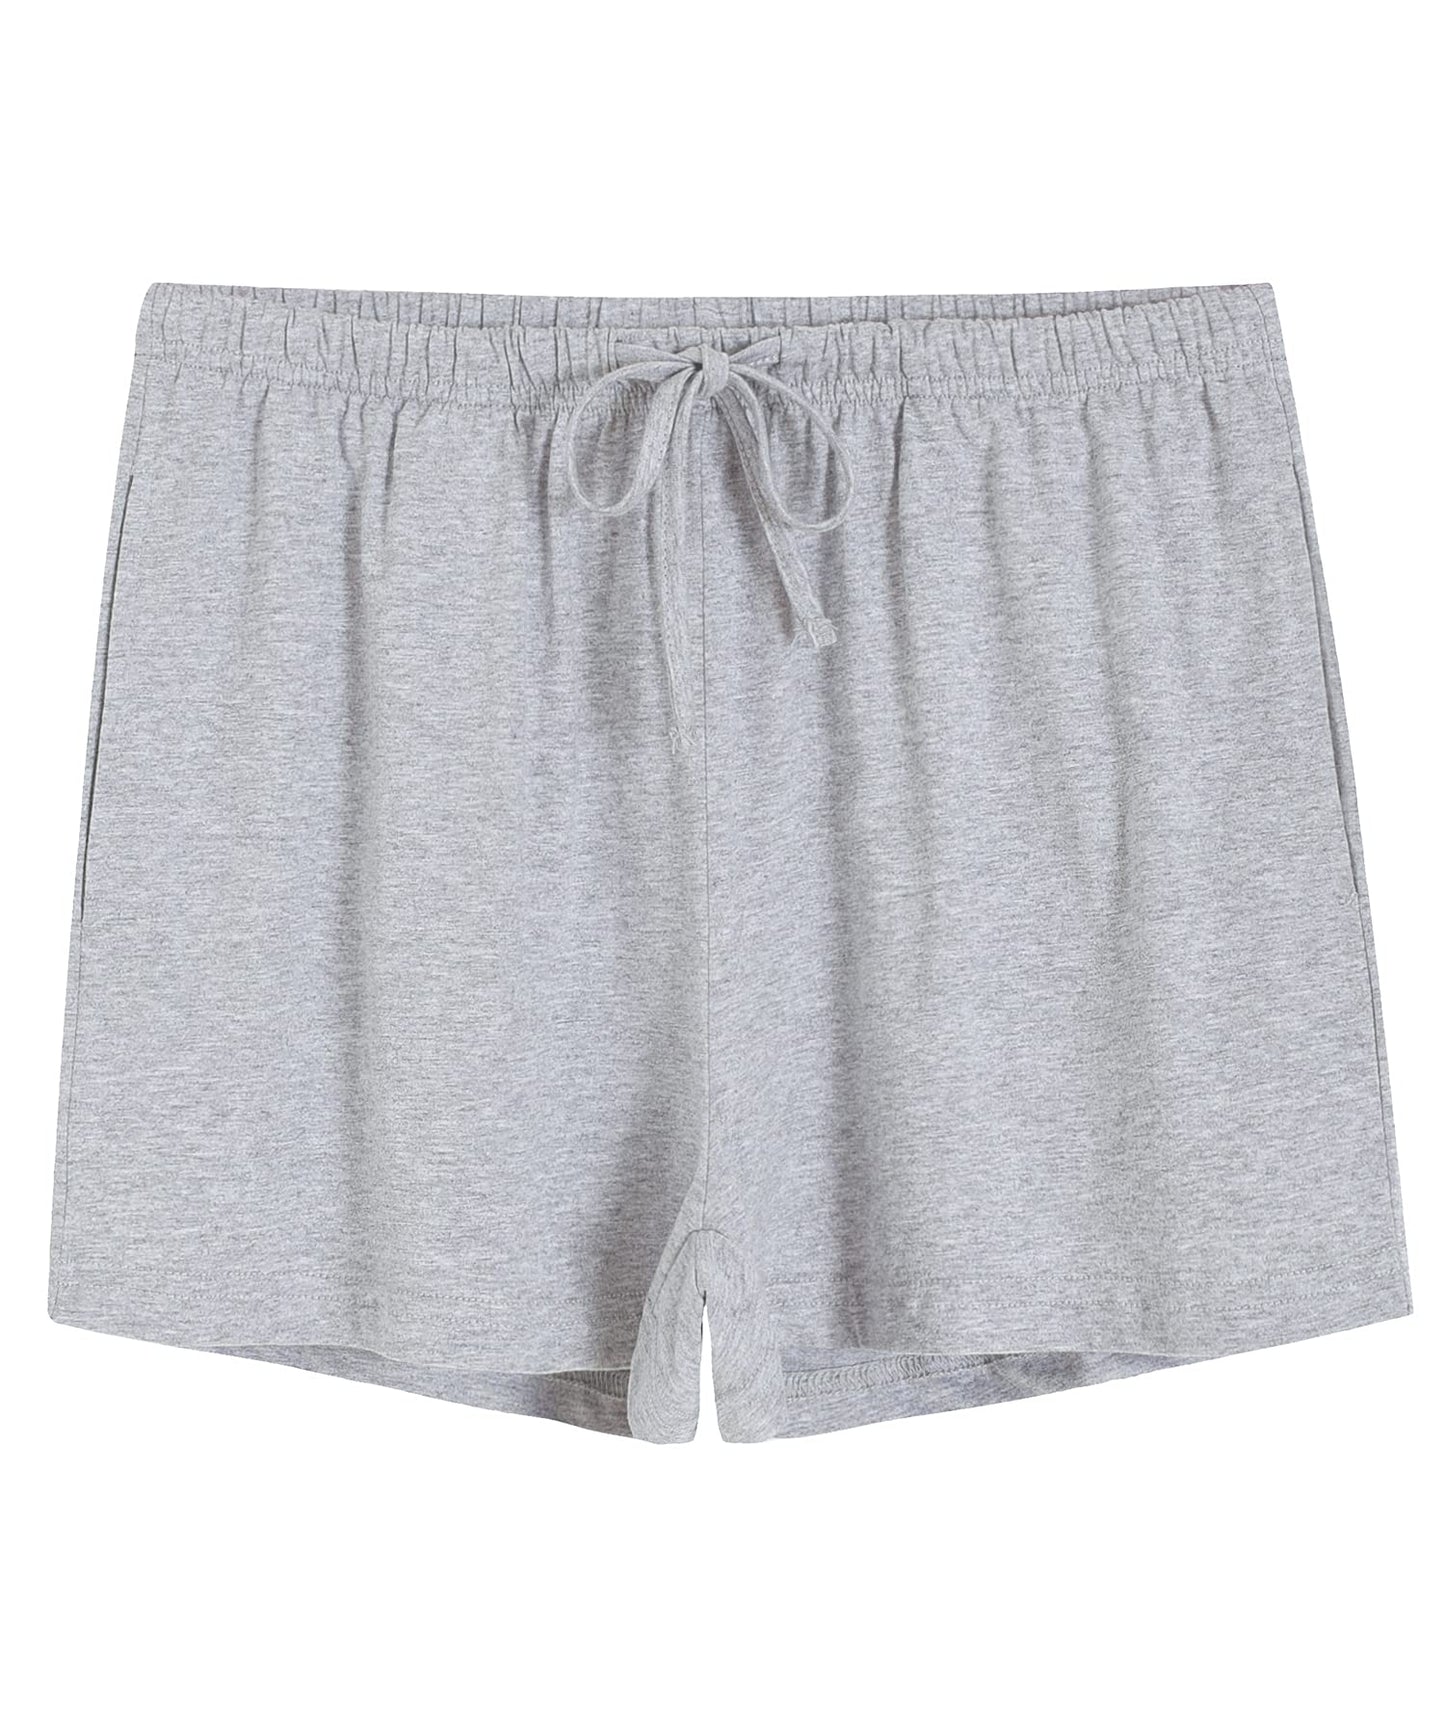 Women's Cotton Pajama Shorts Knit Lounge Shorts with Pockets - Latuza